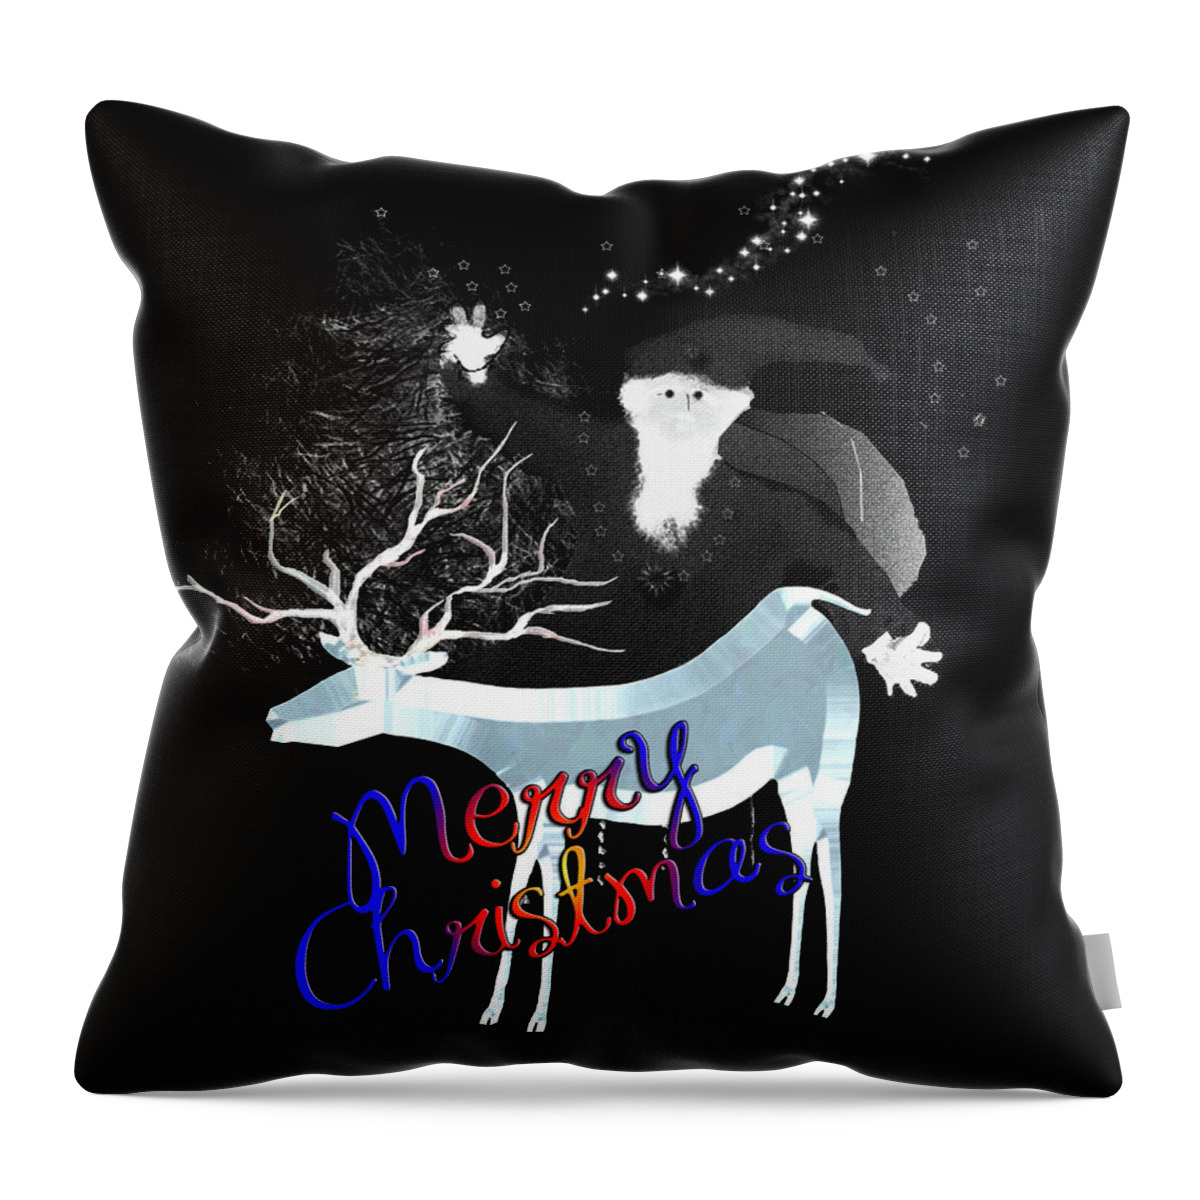 Santa Throw Pillow featuring the digital art Merry Old Santa by Asok Mukhopadhyay